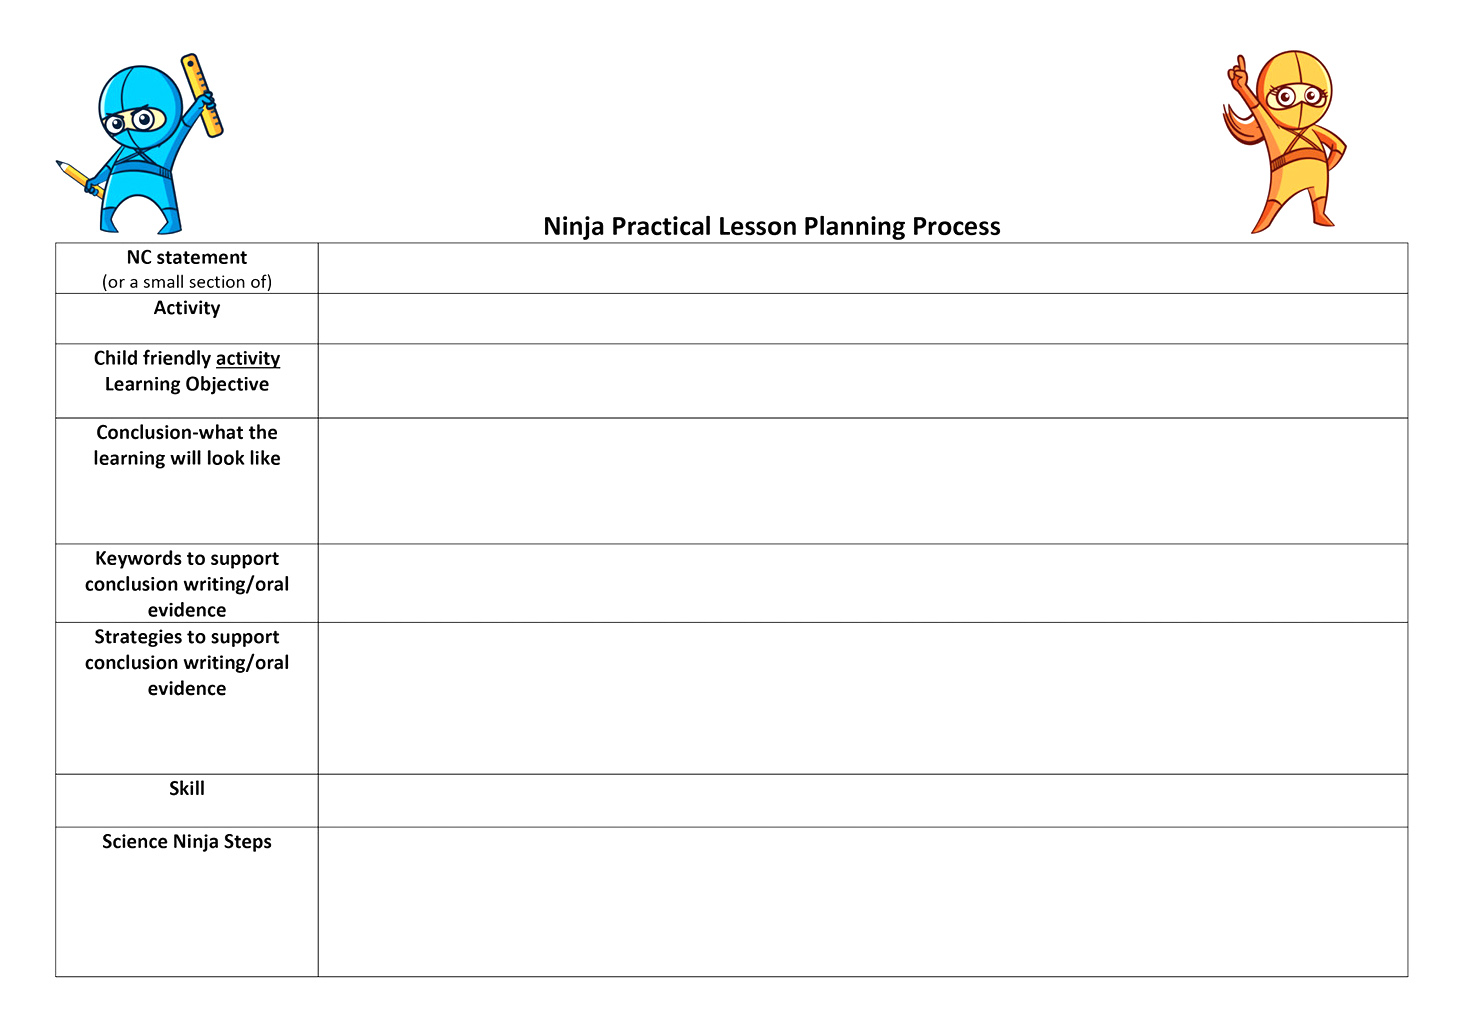 Planning process document.